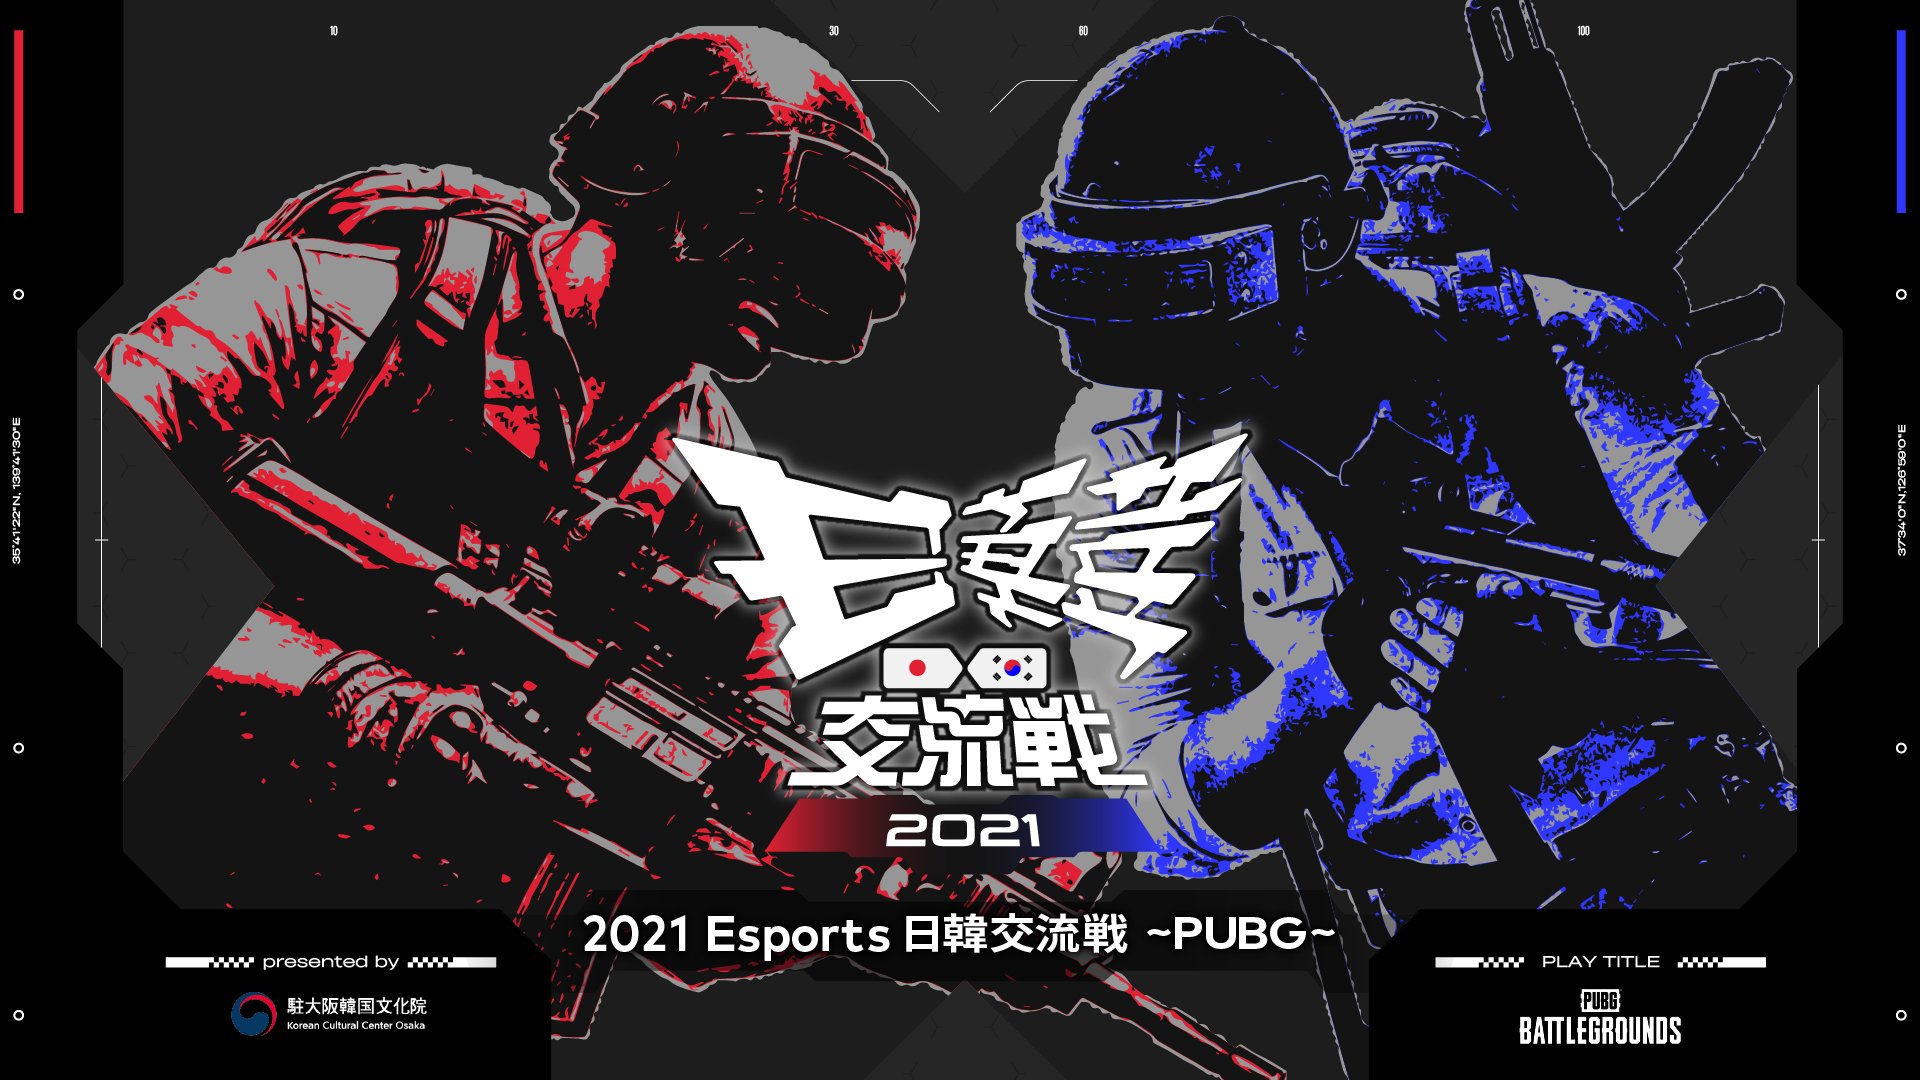 PUBG – 『2021 Esports 日韓交流戦 ~PUBG~』に出場